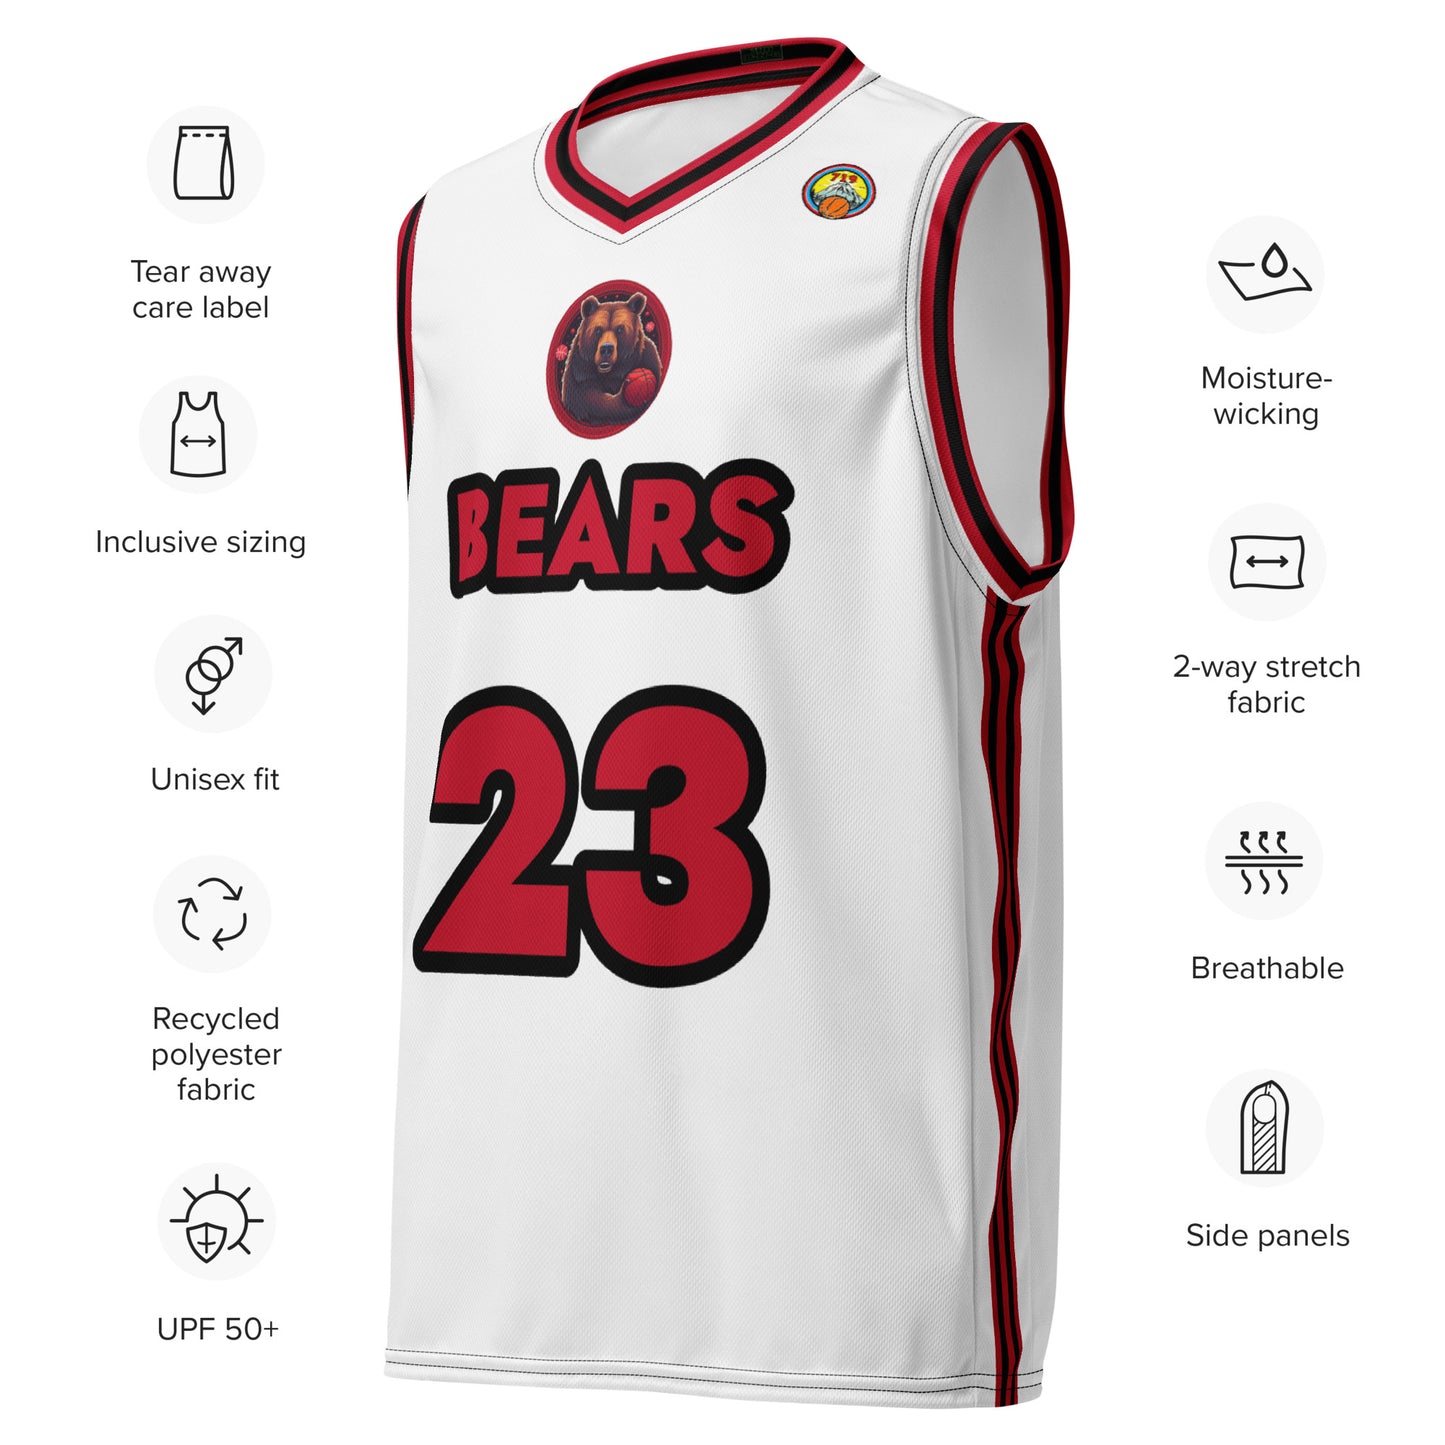 Big Bear Basketball Jersey [AWAY] (#23)